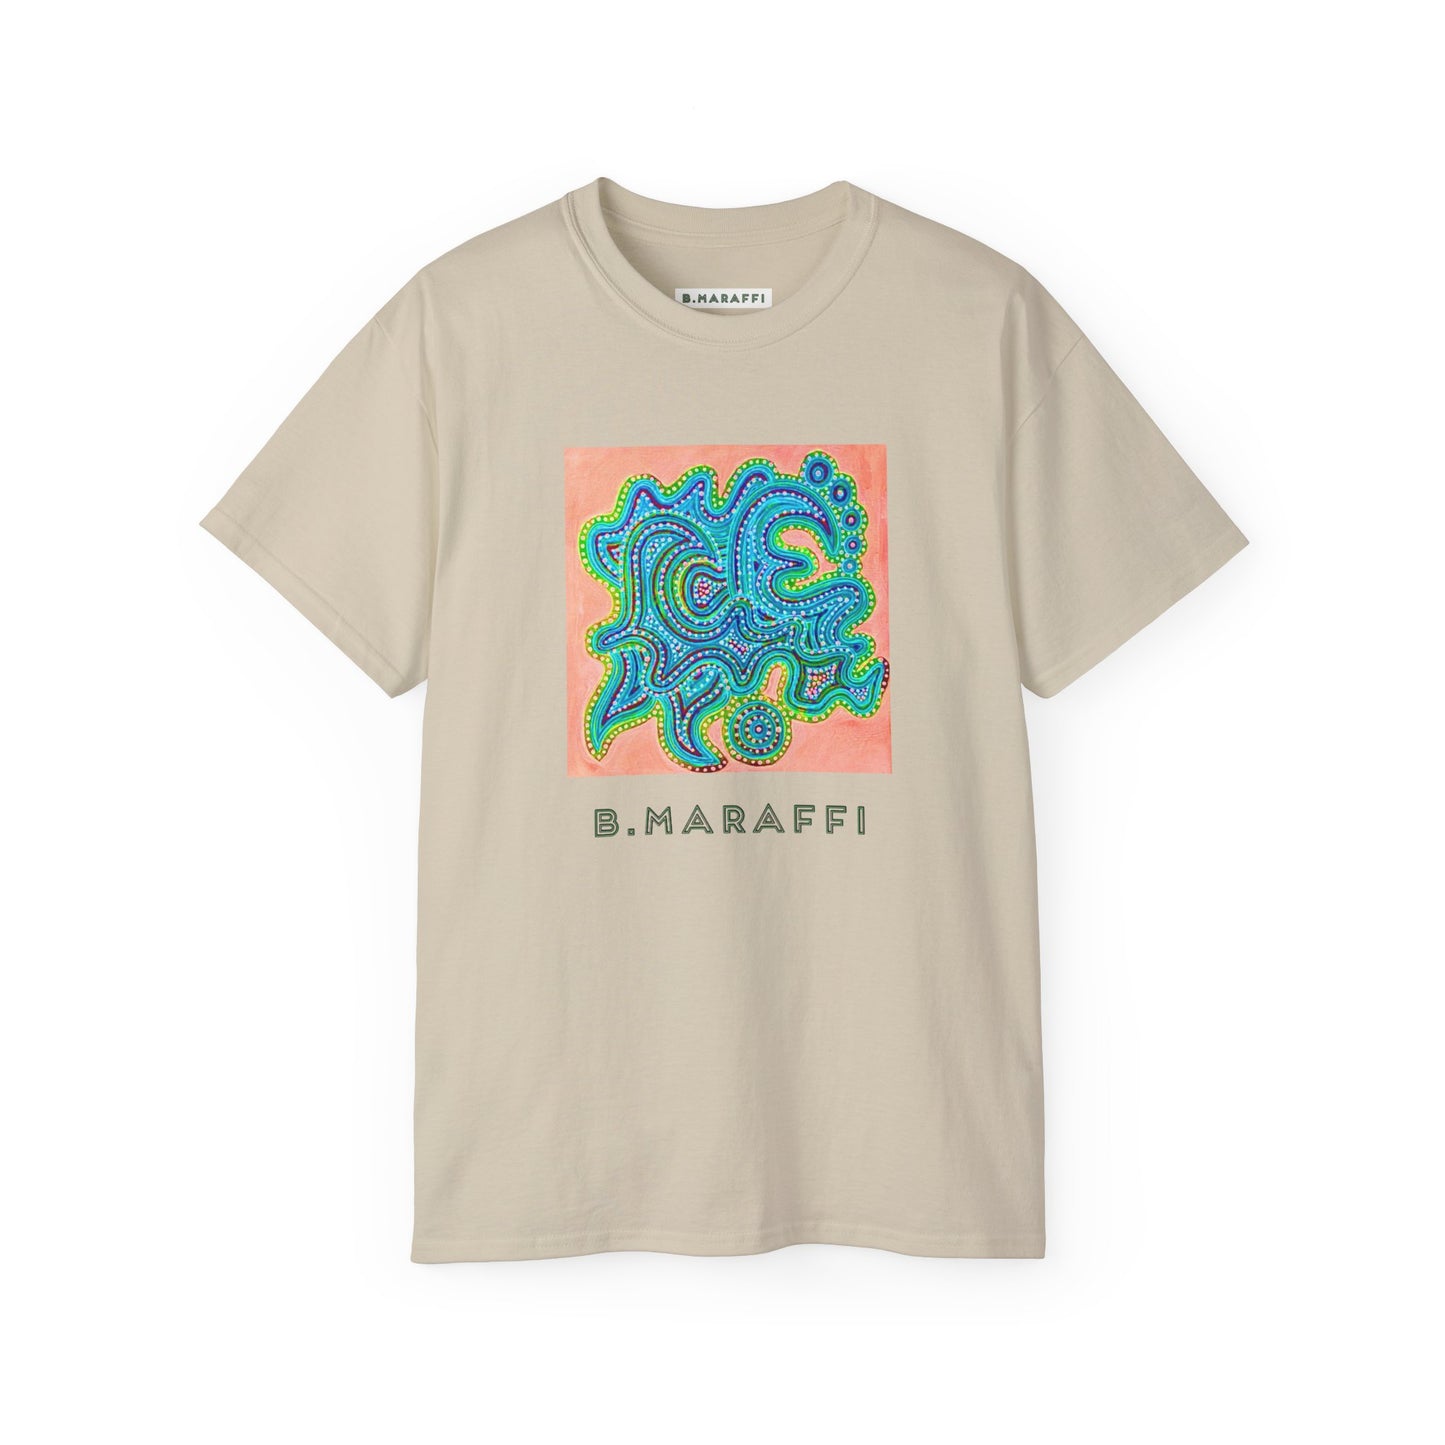 B.Maraffi Cotton T-Shirt